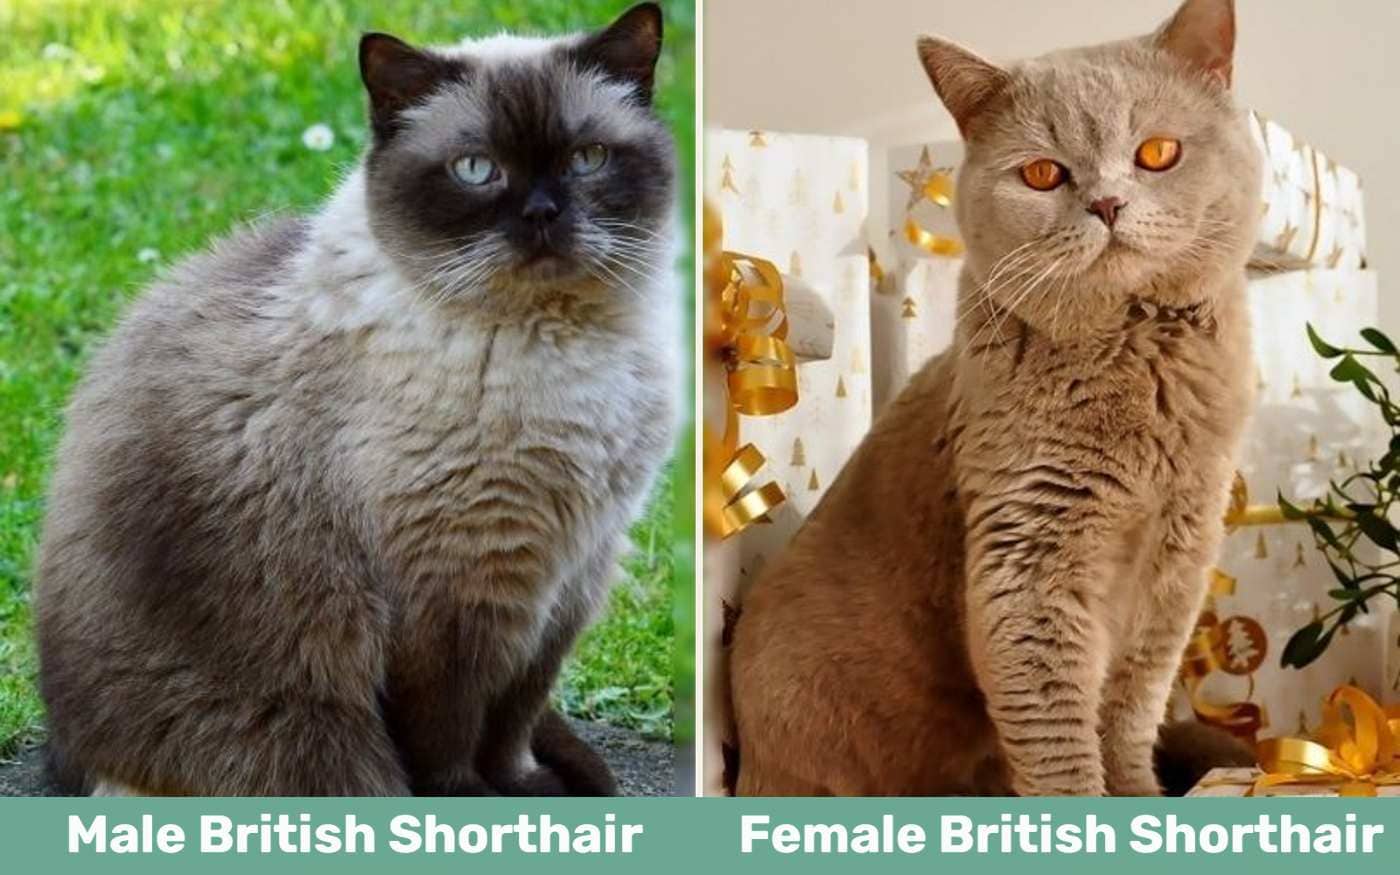 Male vs. Female British Shorthair cat